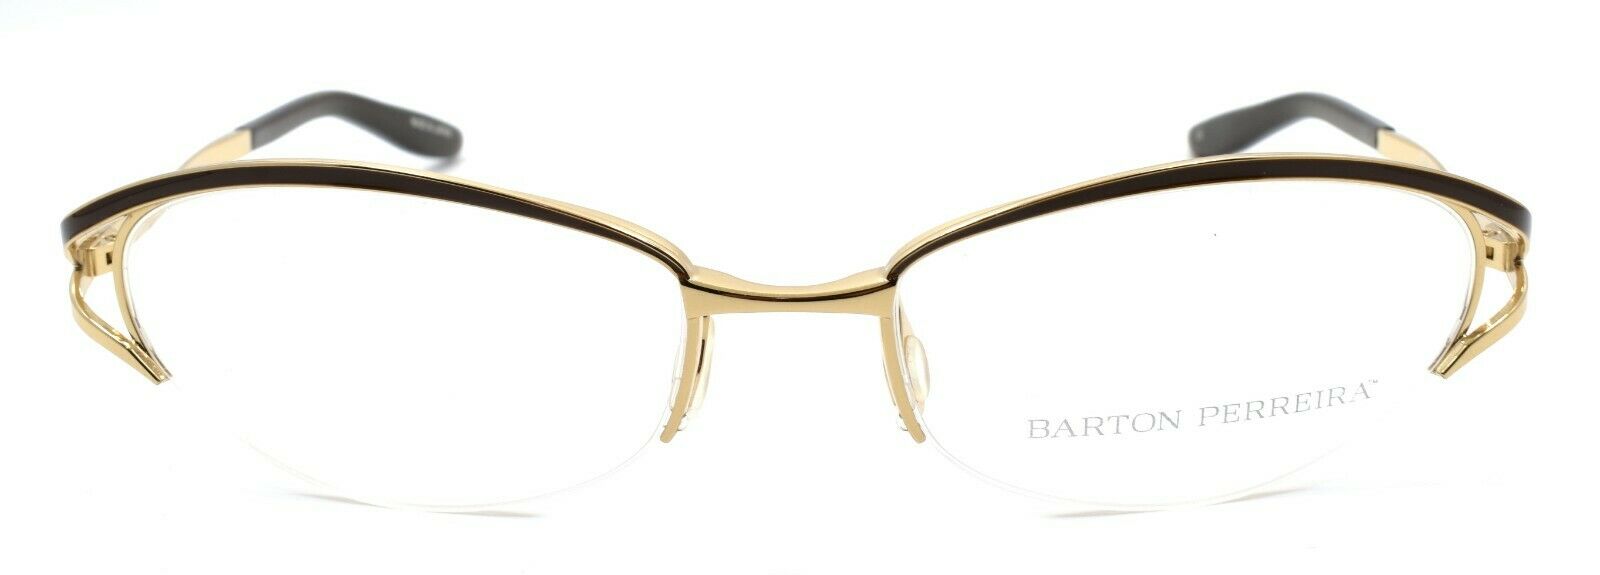 2-Barton Perreira Eliza Women's Glasses Frames 53-17-125 Foxy Brown / Gold-672263038207-IKSpecs